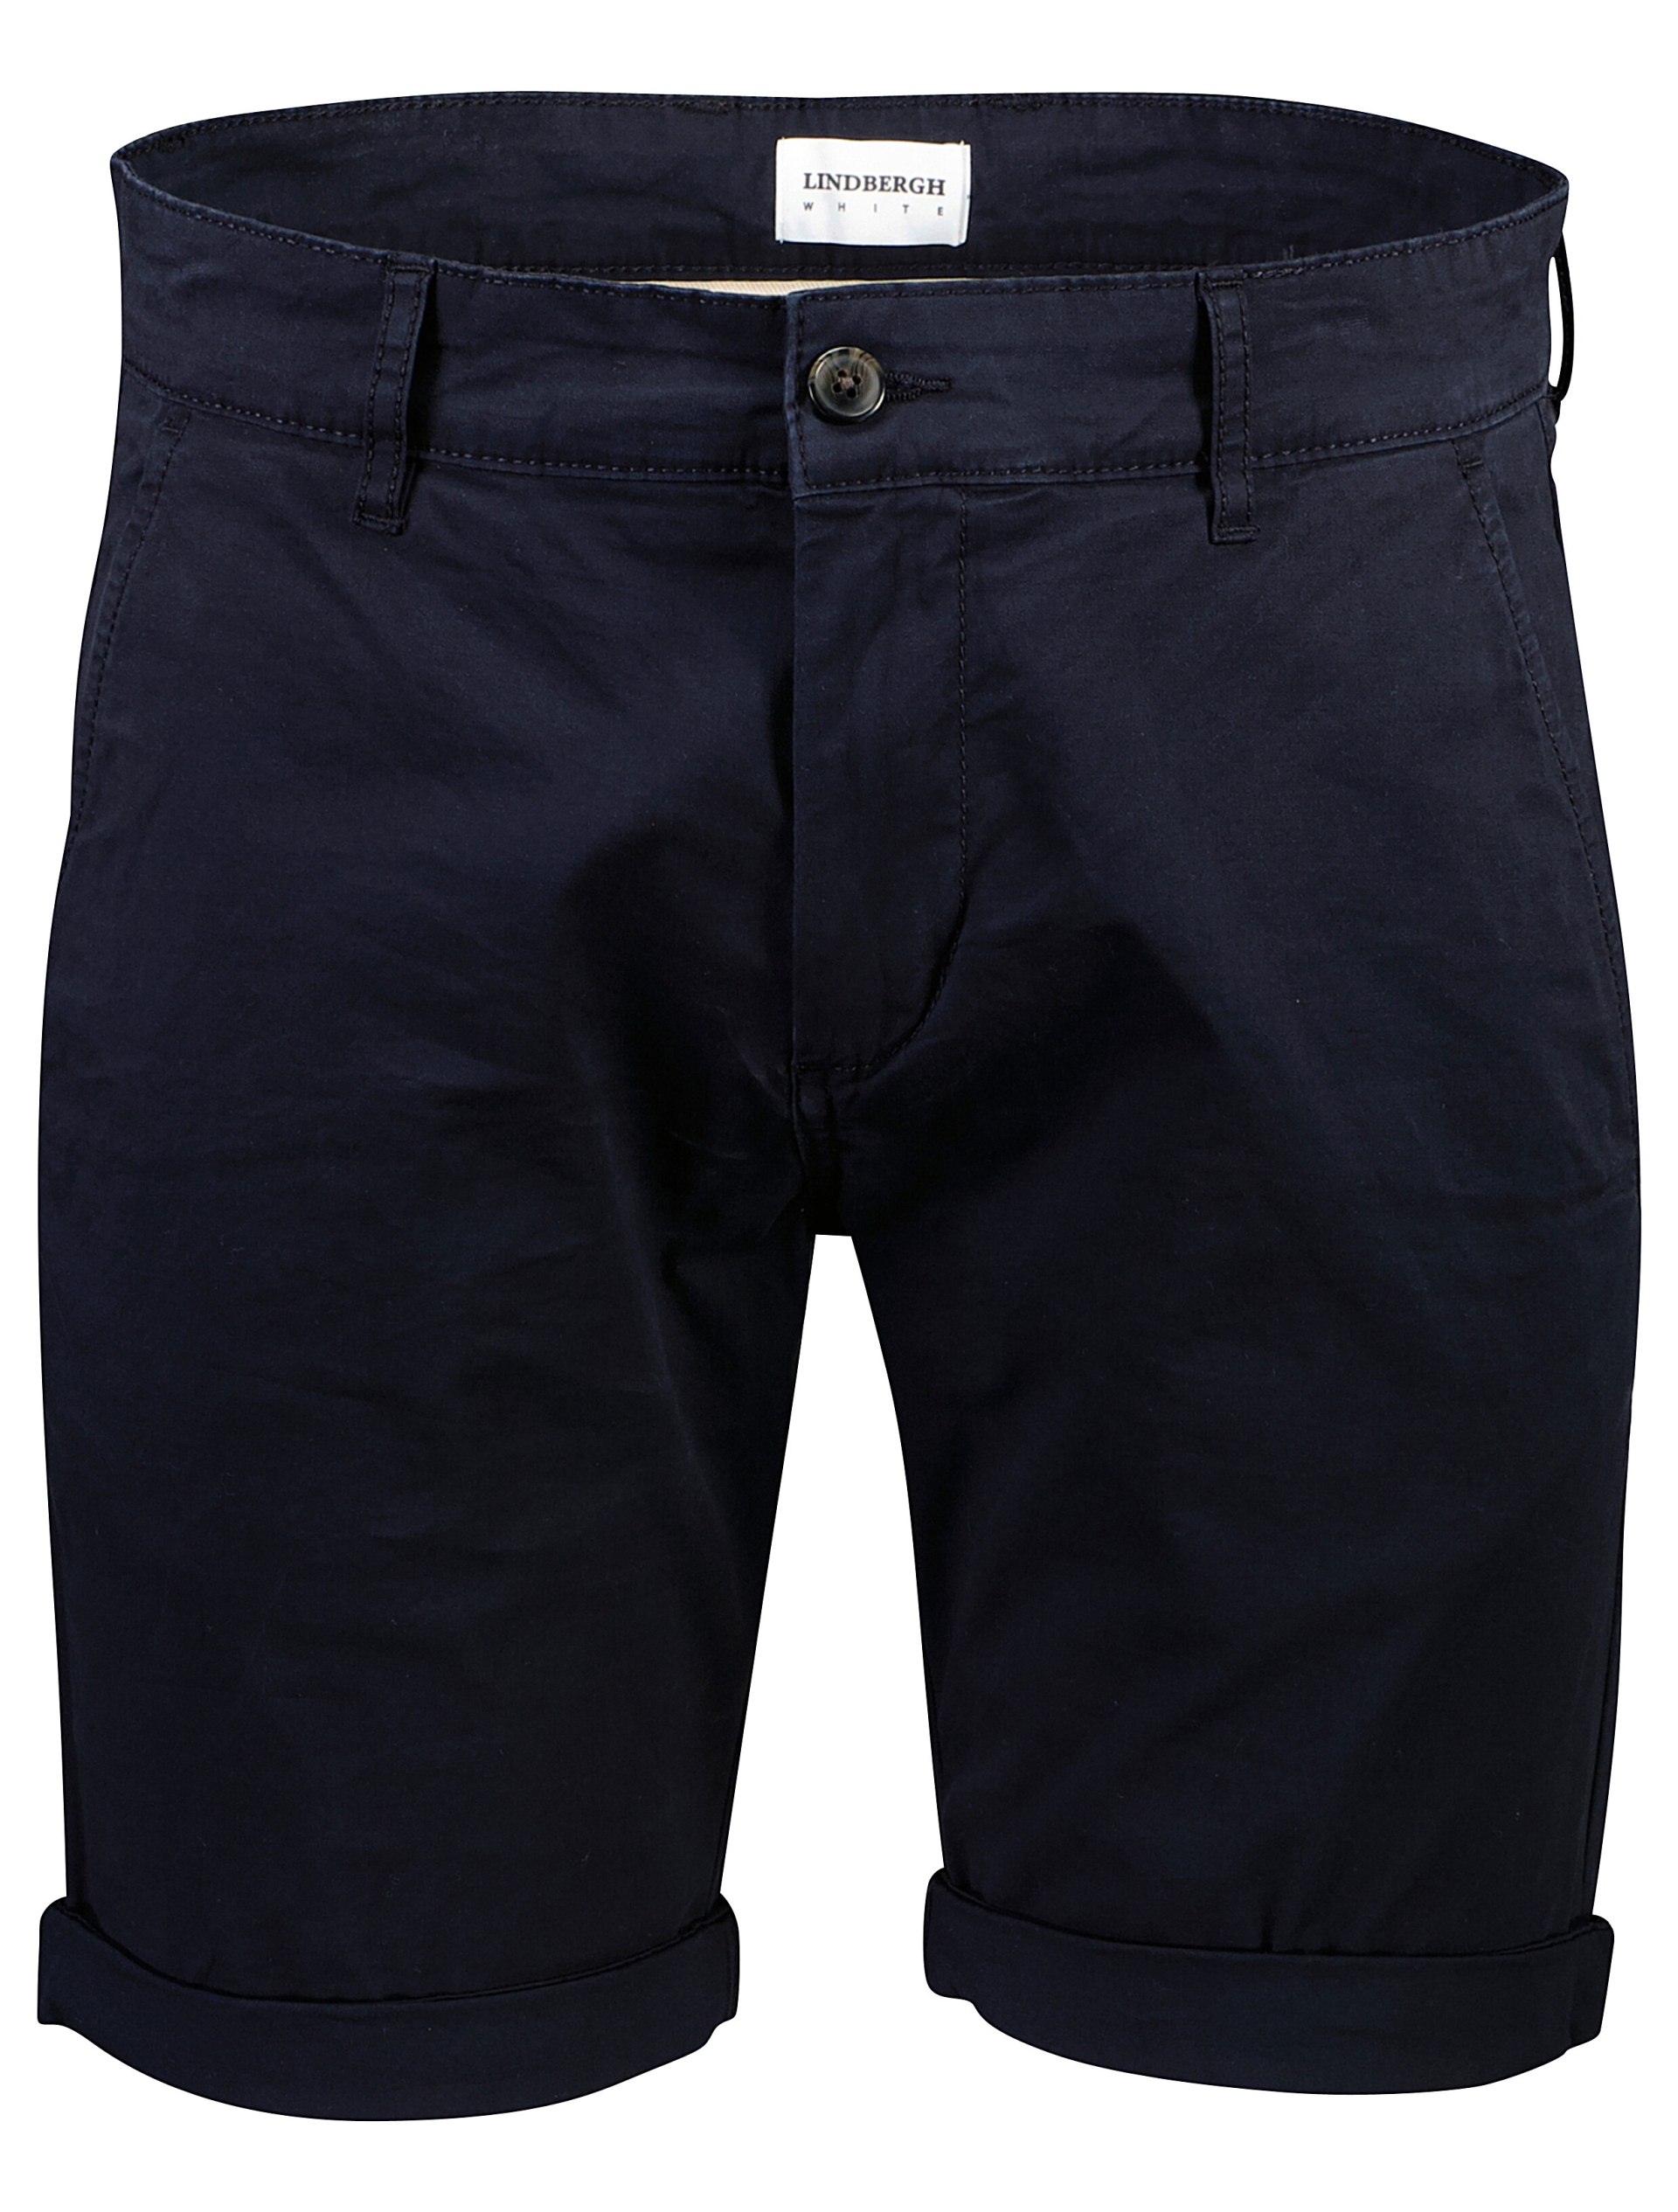 Lindbergh Chino shorts sort / black